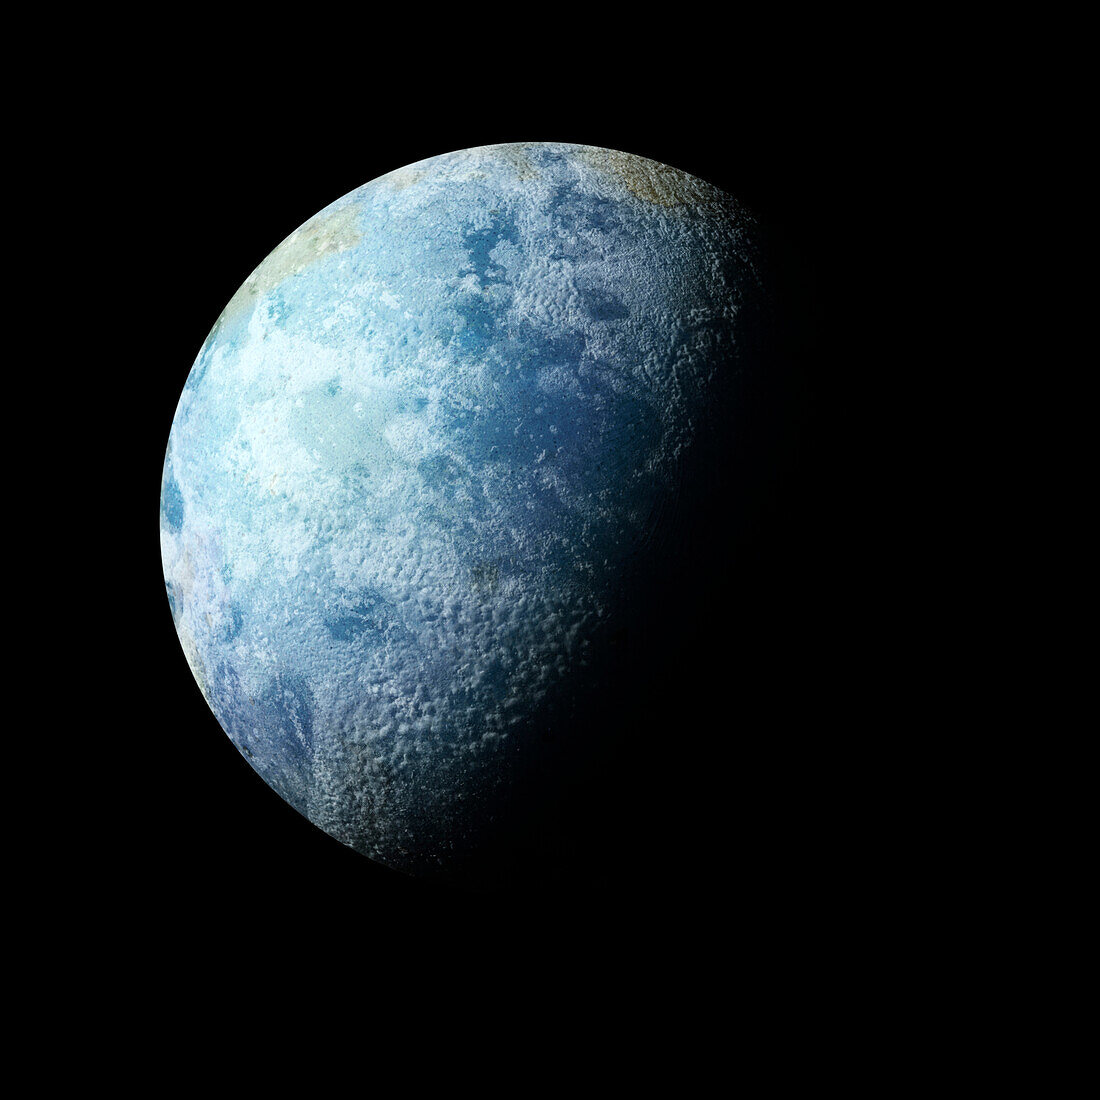 Earth-like planet, composite image